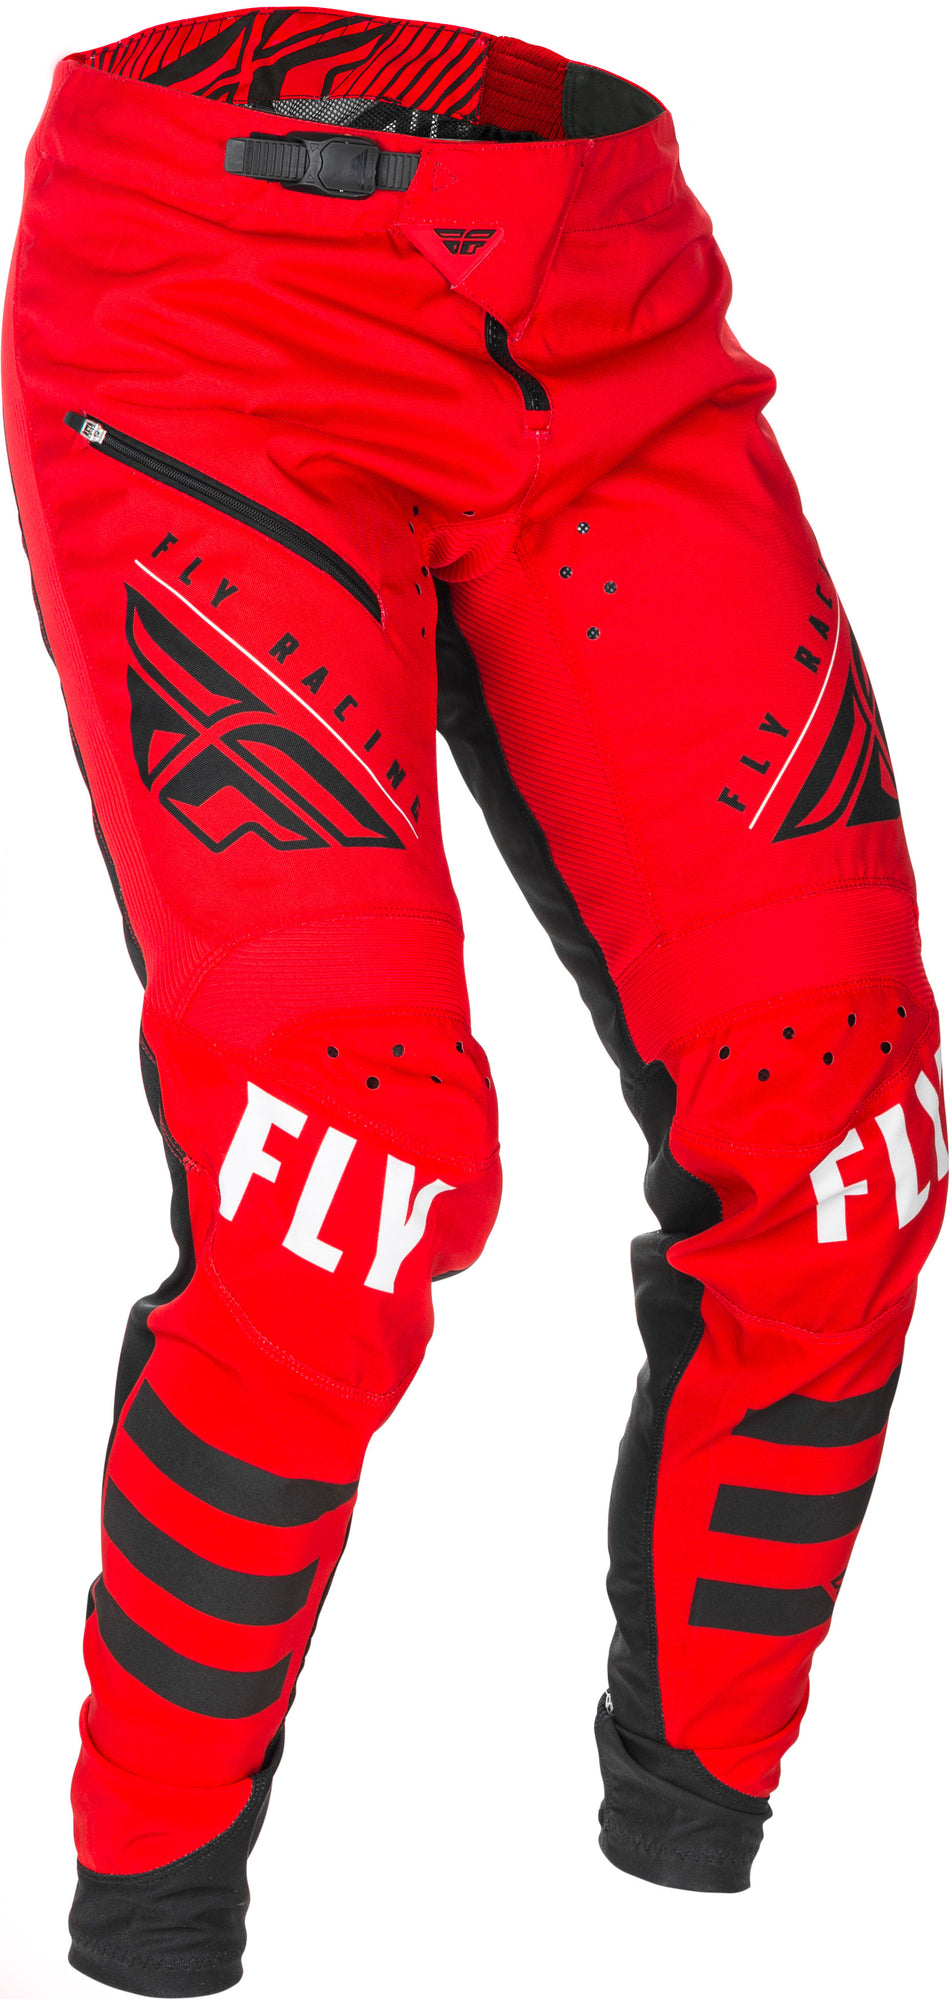 FLY RACING Kinetic Bicycle Pants Red/Black Sz 26 373-04226